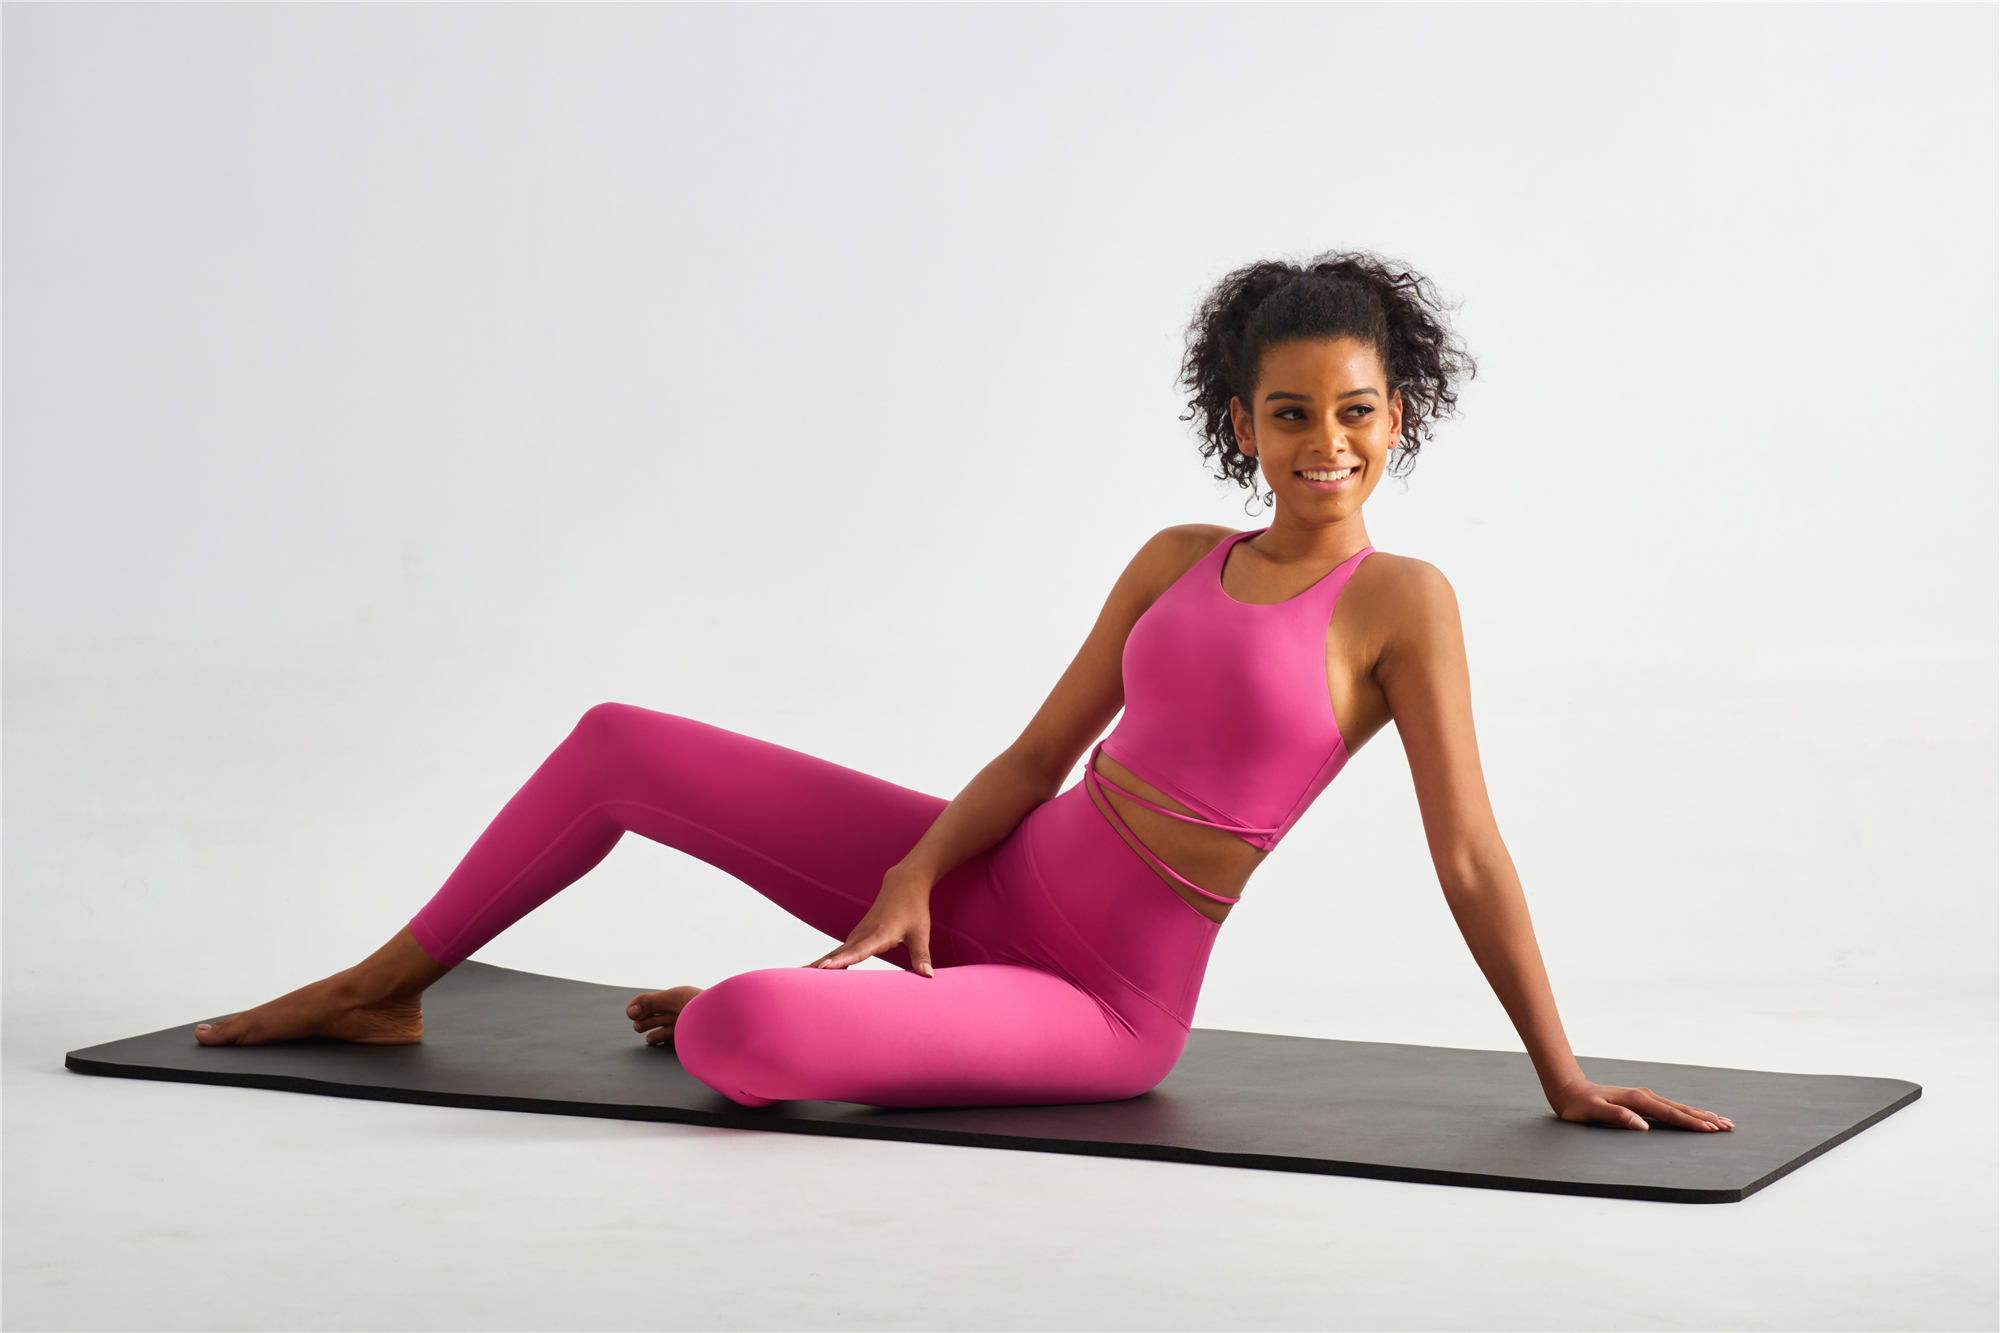 Hergymclothing pink yoga gym wear